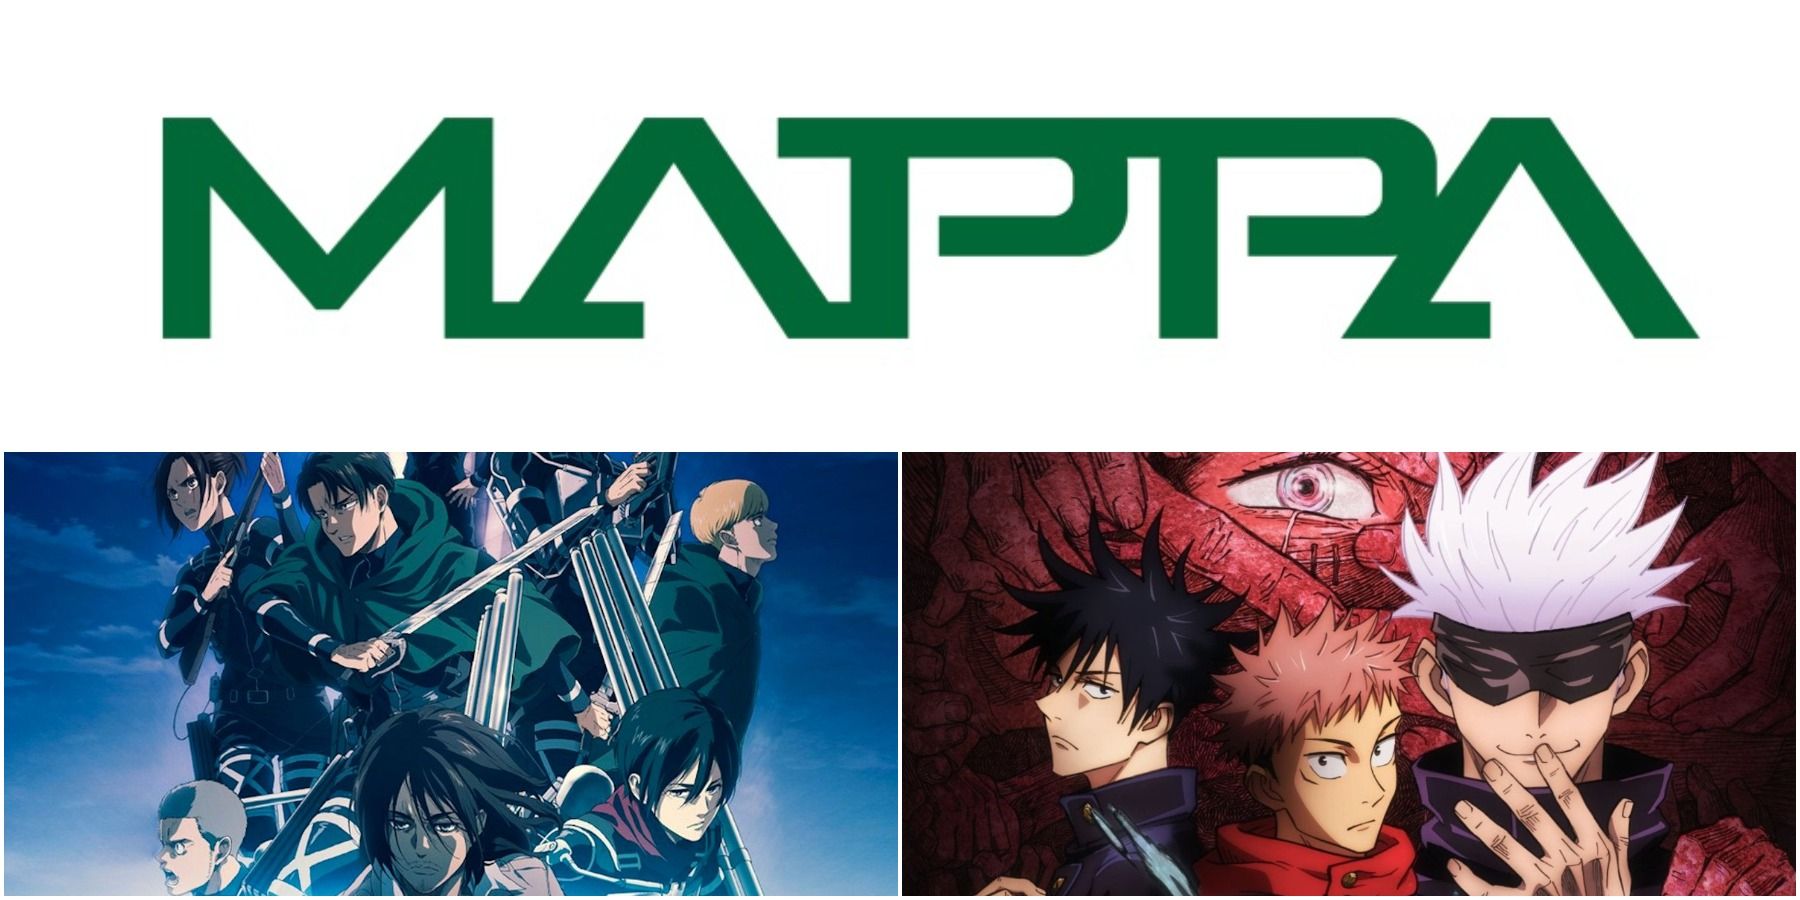 MAPPA logo, Attack on Titan season four and Jujutsu Kaisen anime visuals